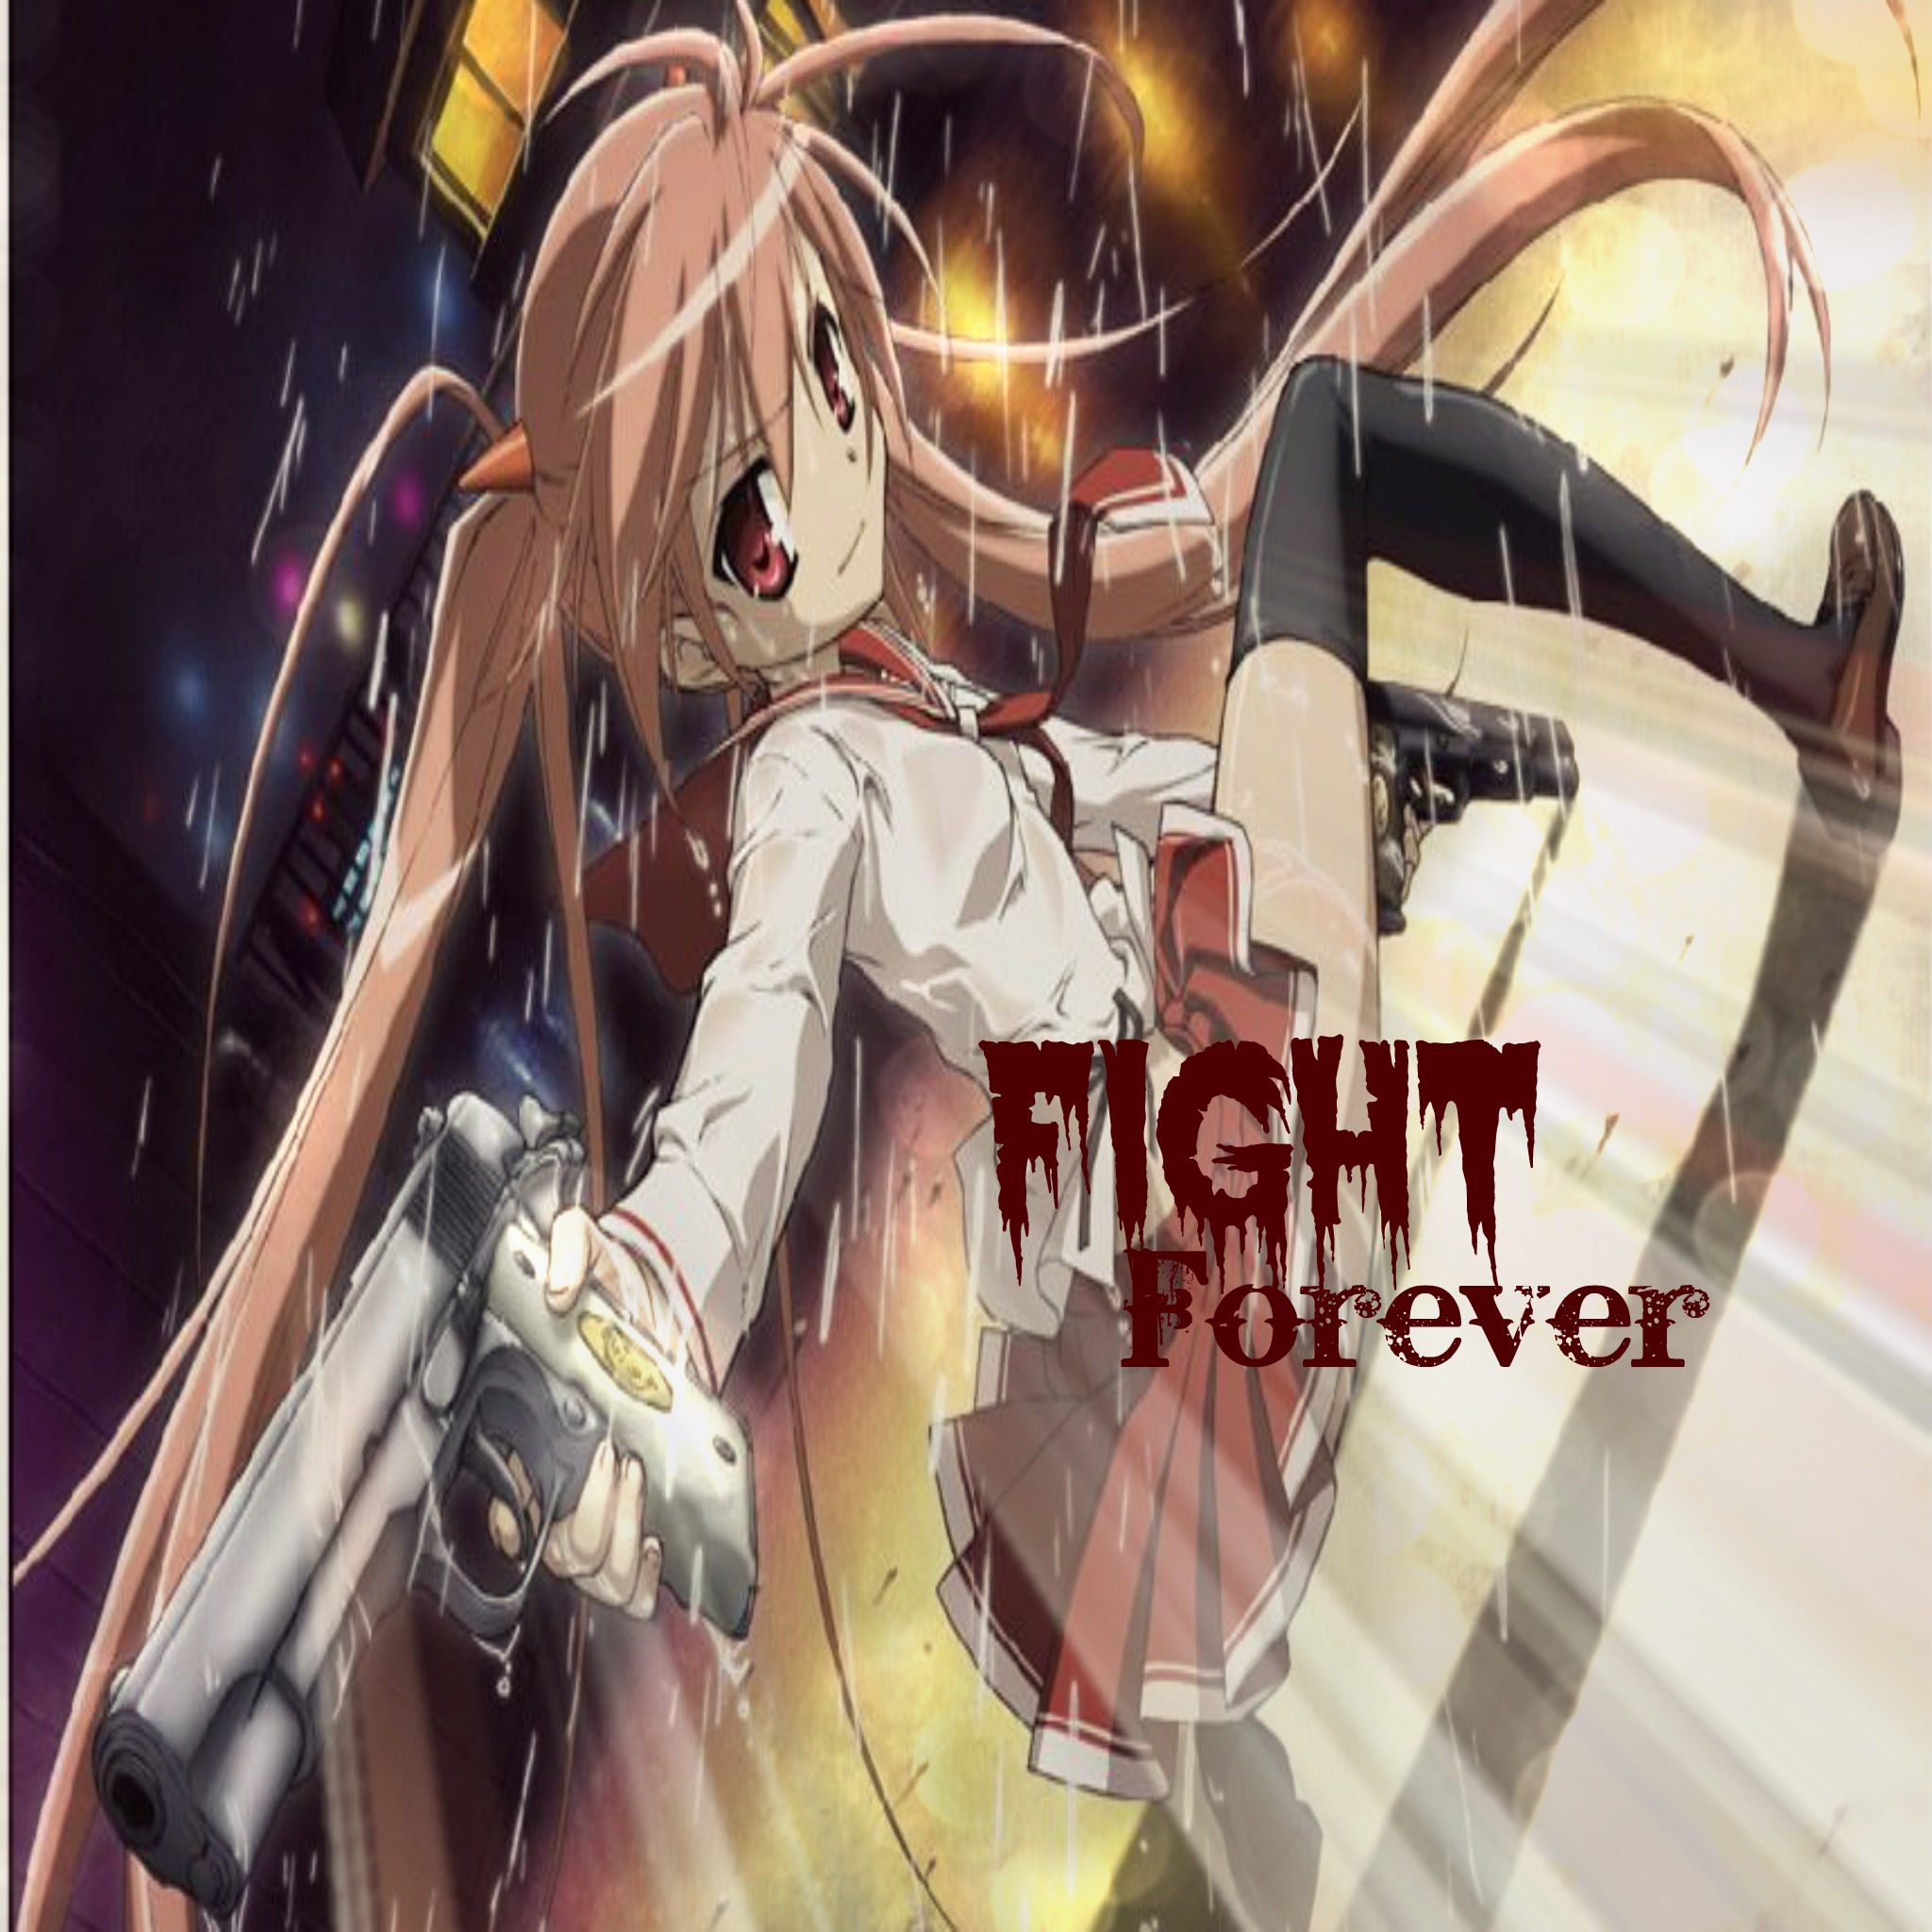 Fight forever